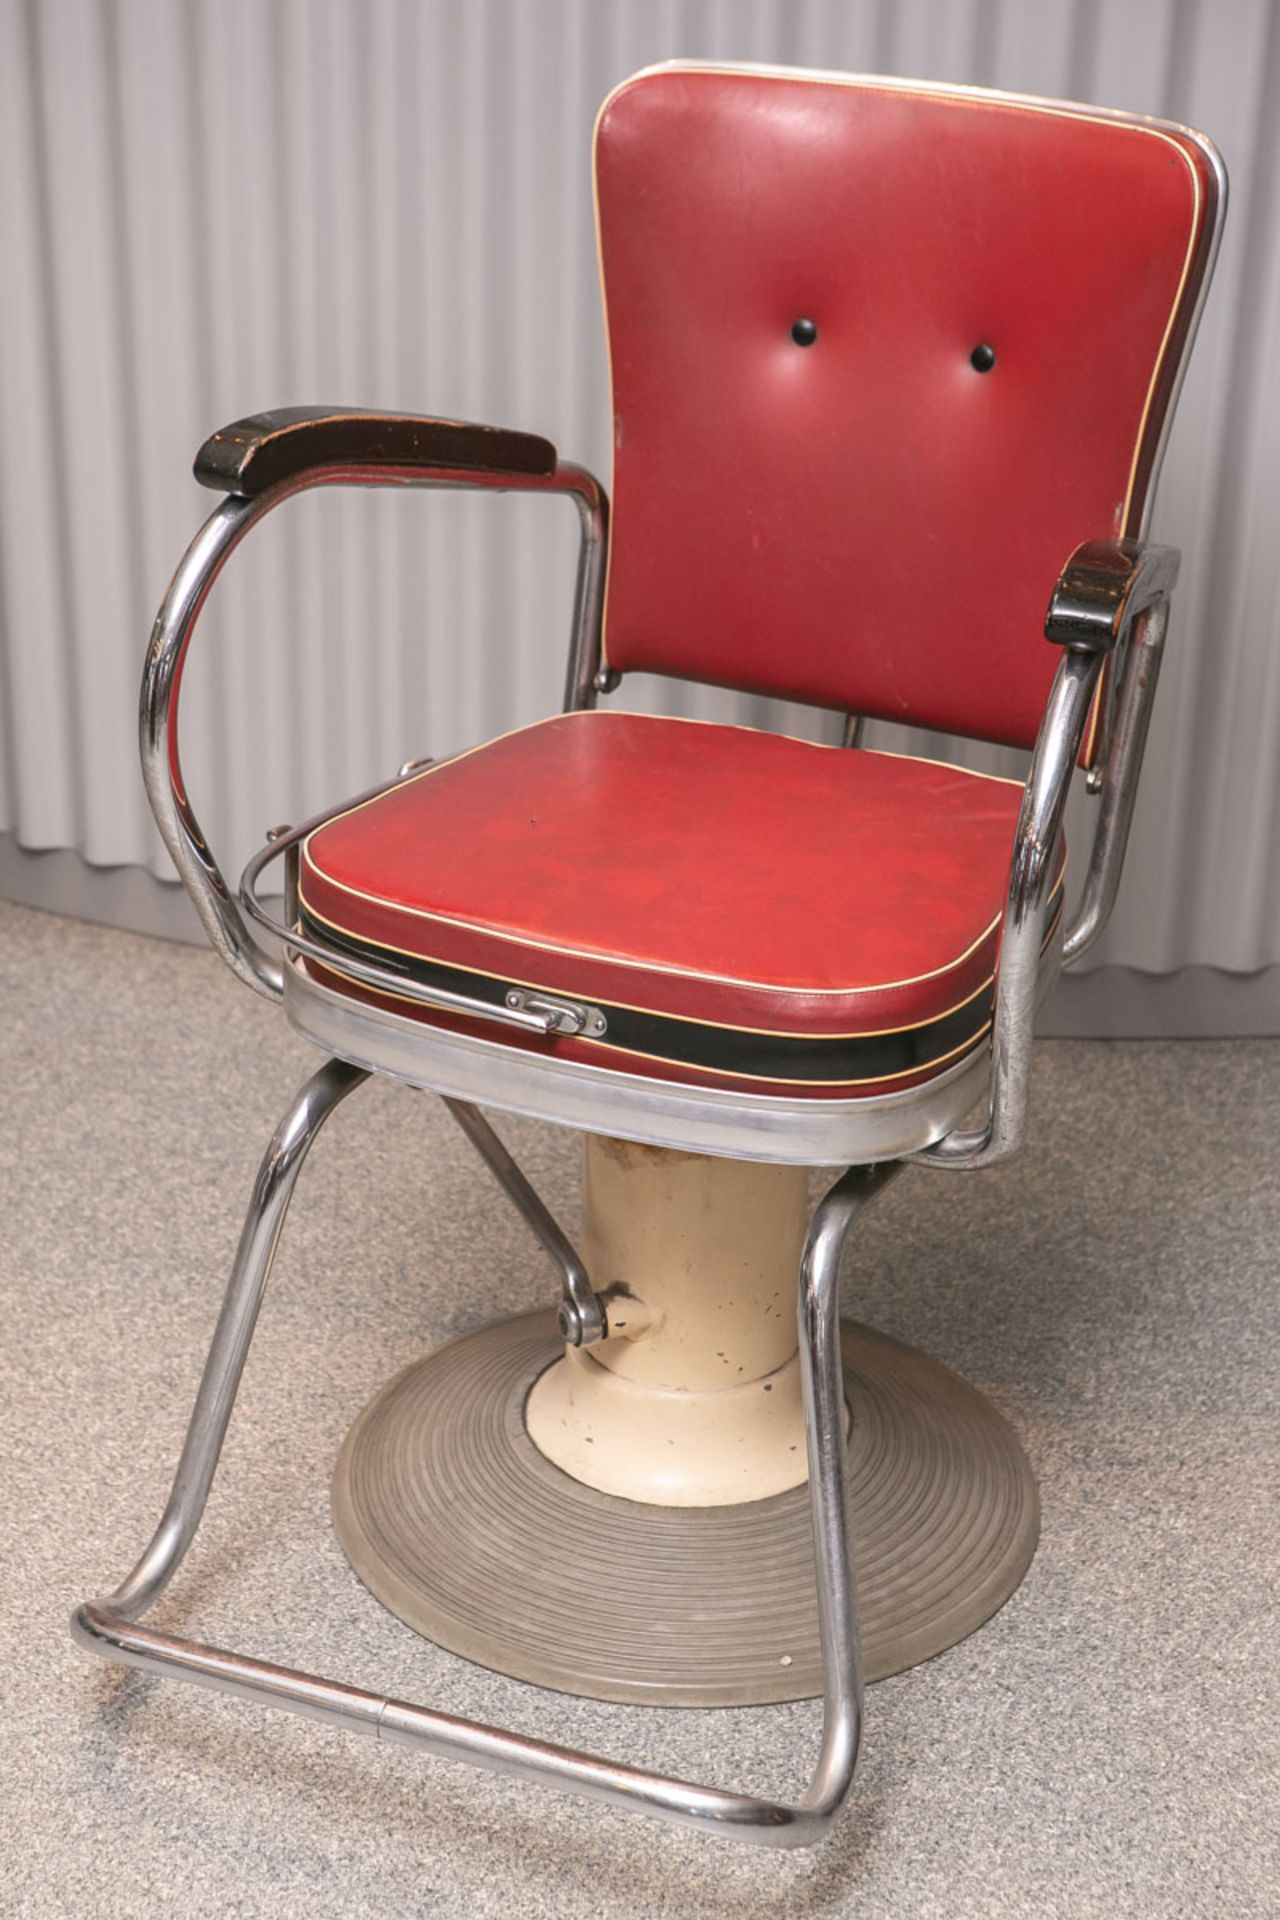 Friseurstuhl (1950/60er Jahre), Rückenlehne u. Sitz aus rotem Kunstleder, Sitz drehbar, Armlehnen